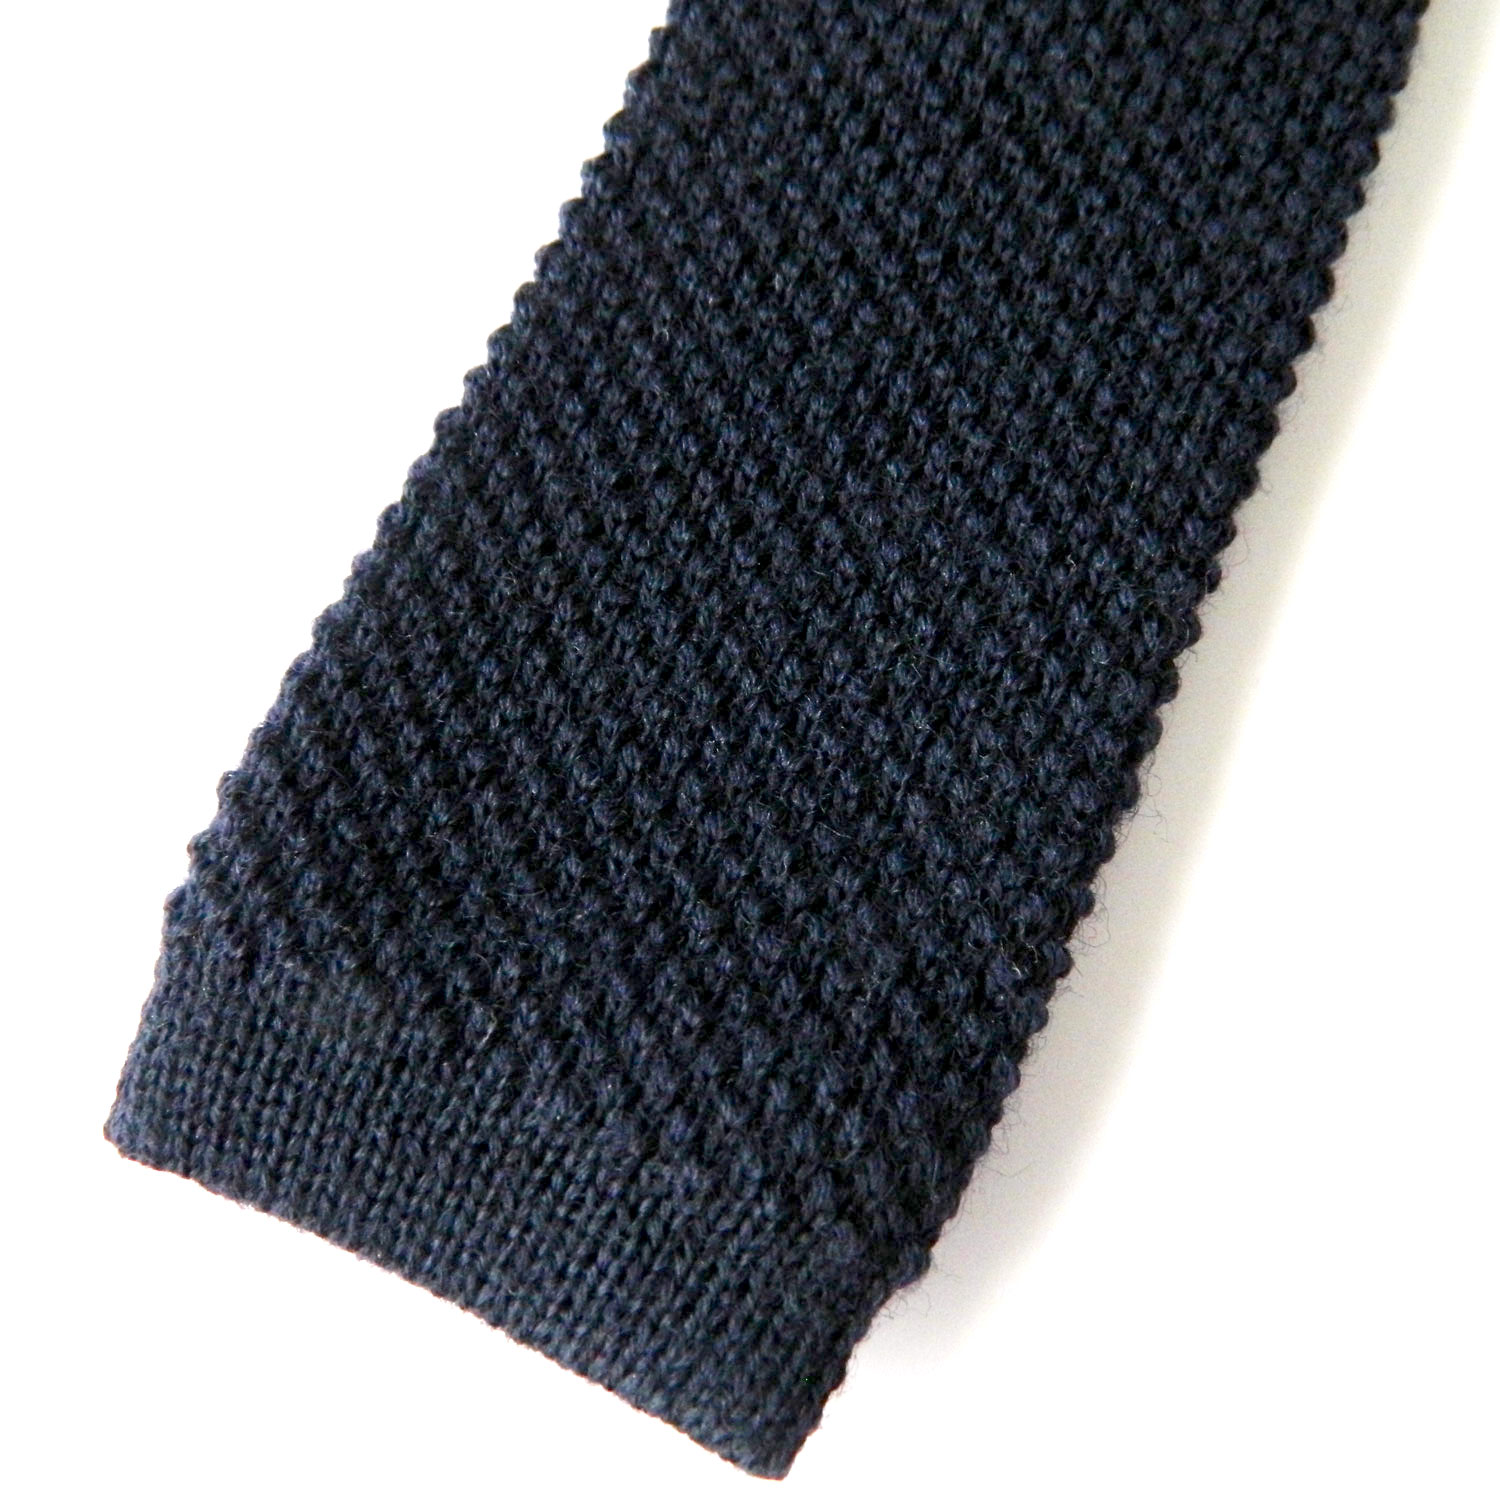 1980s knit tie